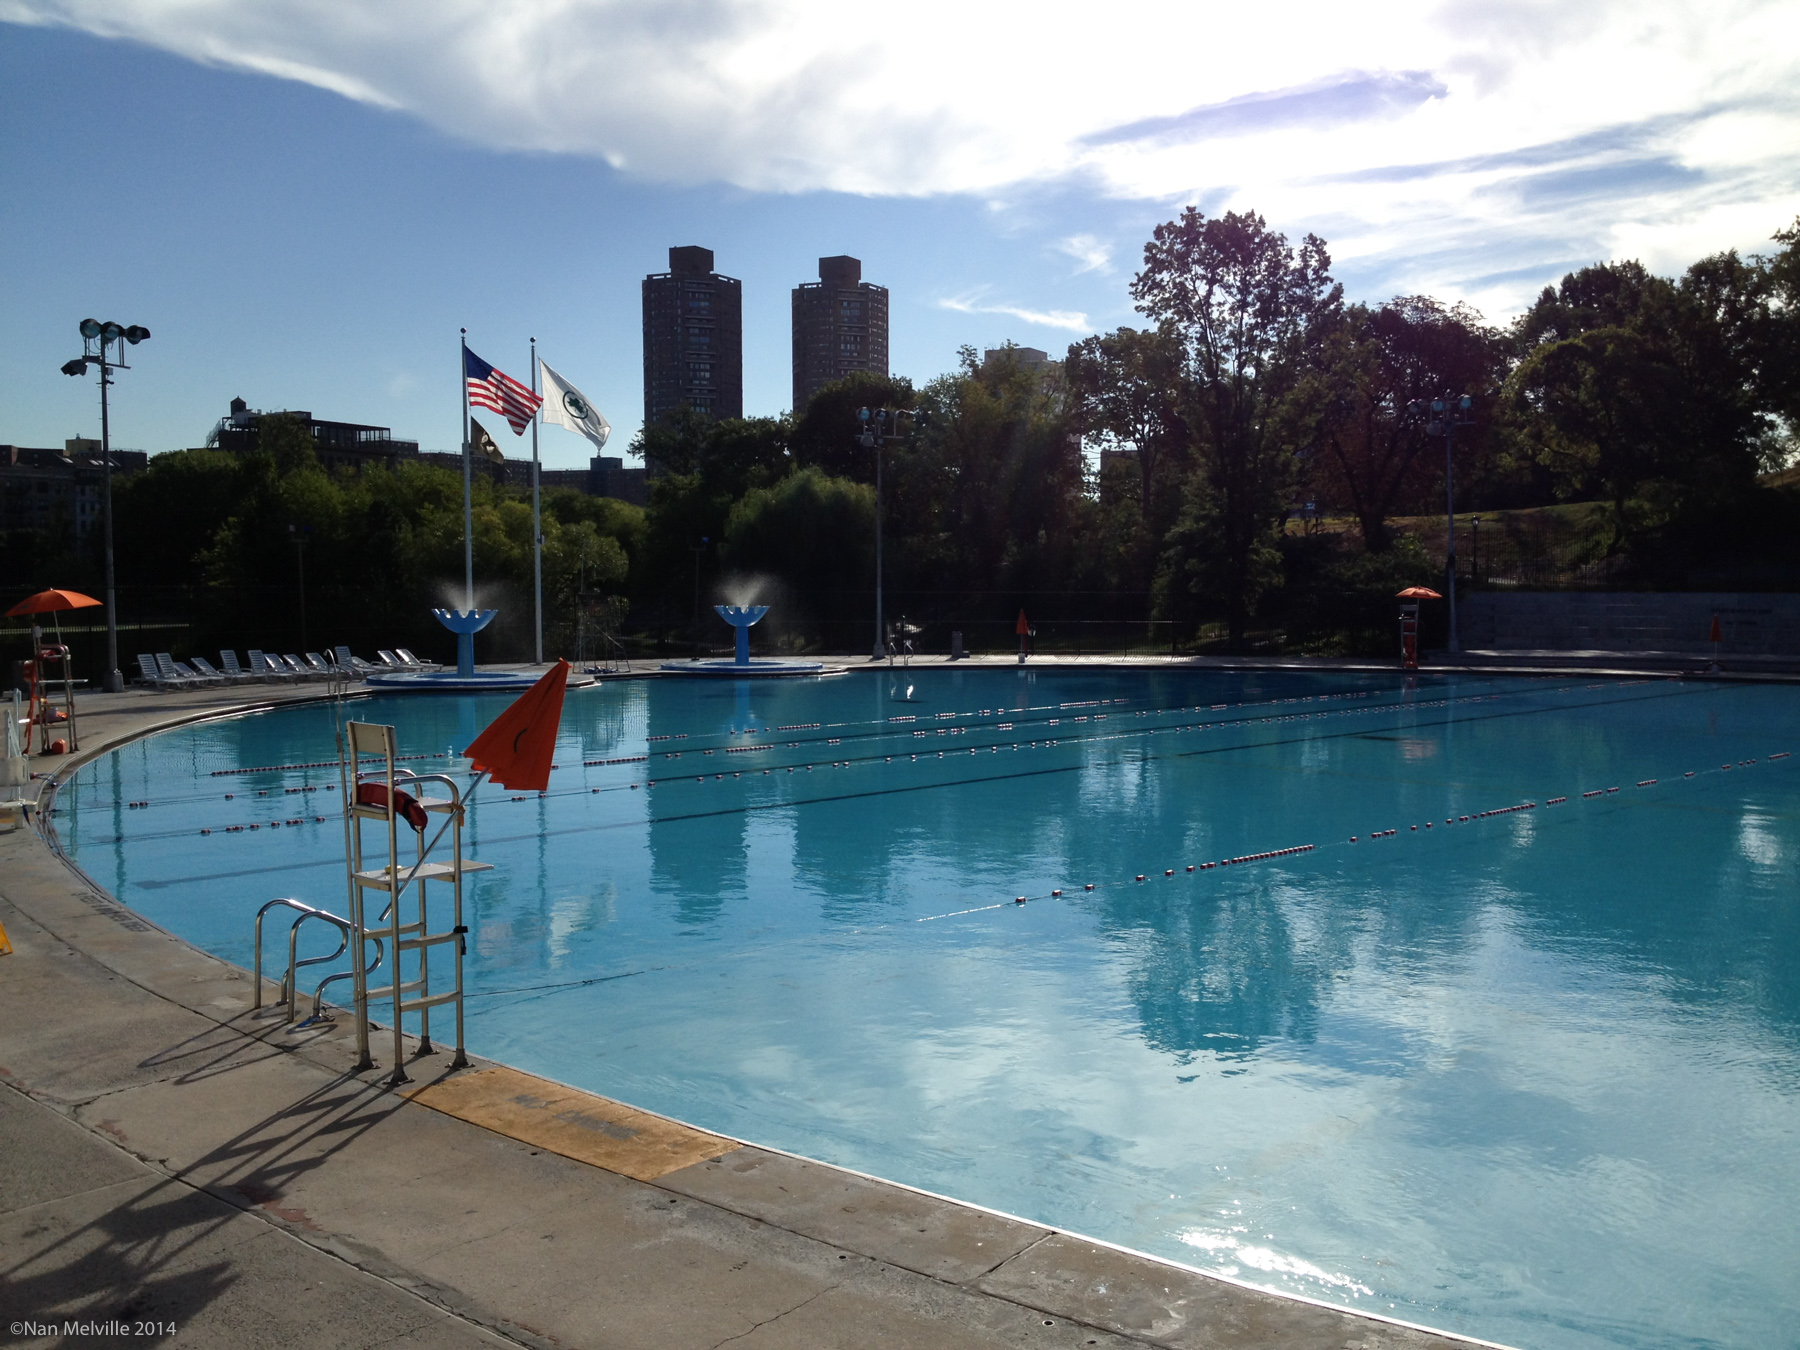 The old Lasker Pool in Central Park.